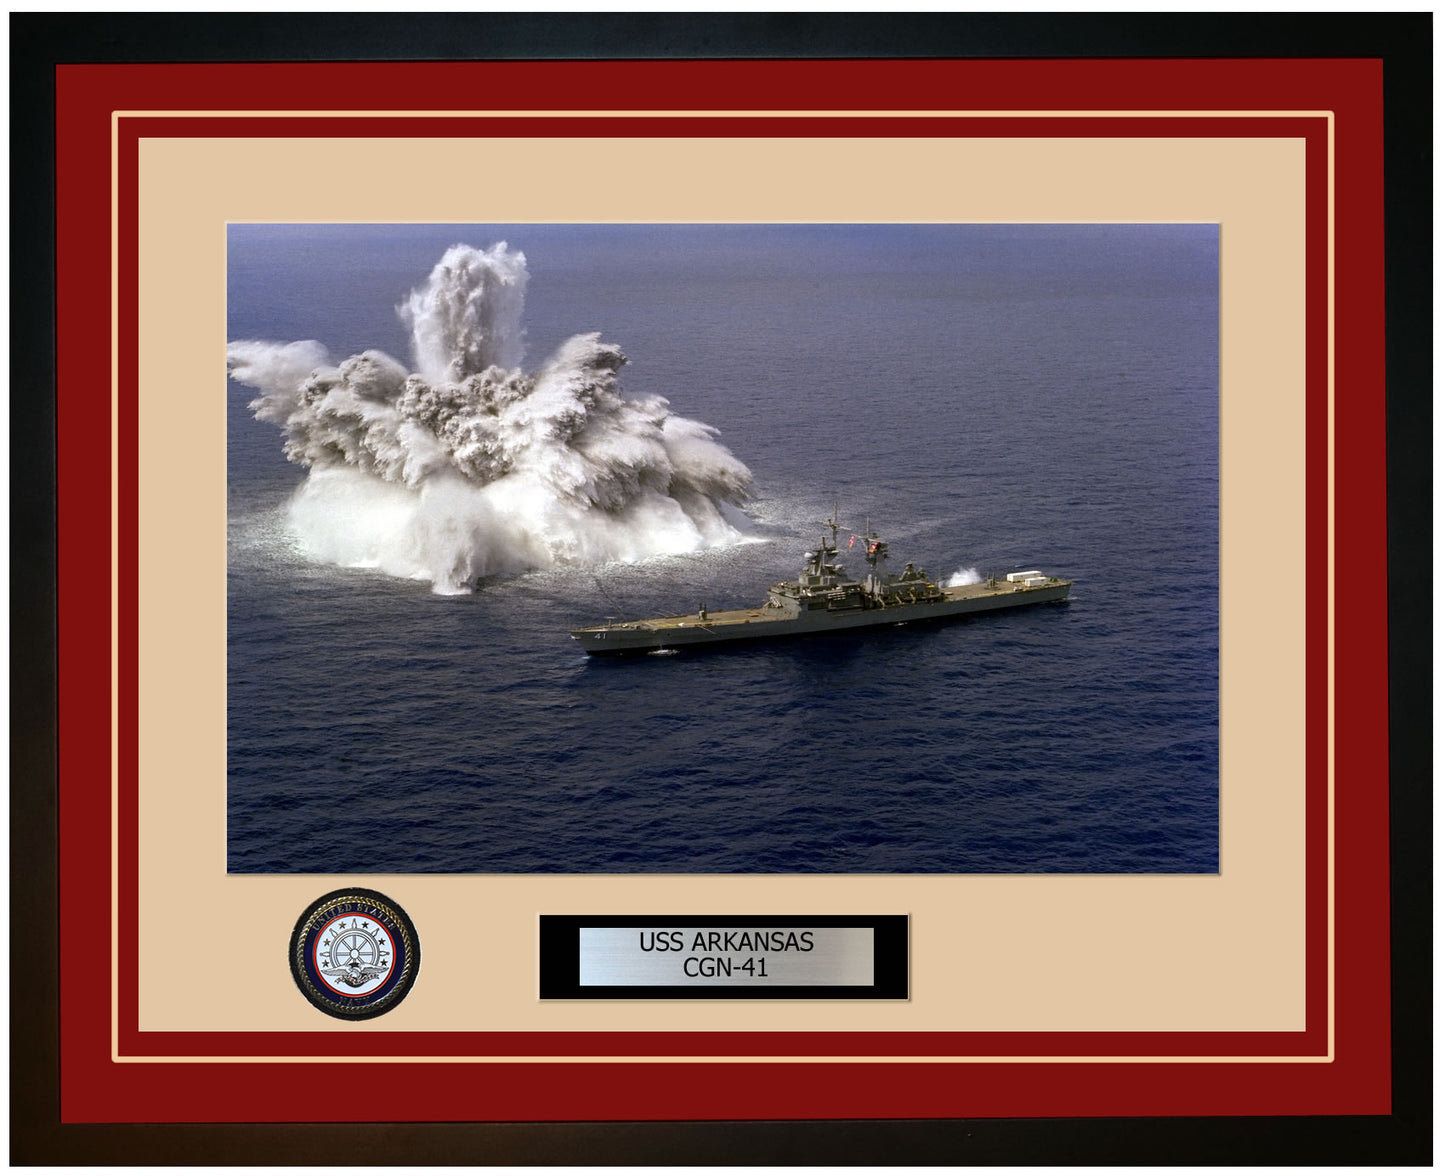 USS ARKANSAS CGN-41 Framed Navy Ship Photo Burgundy